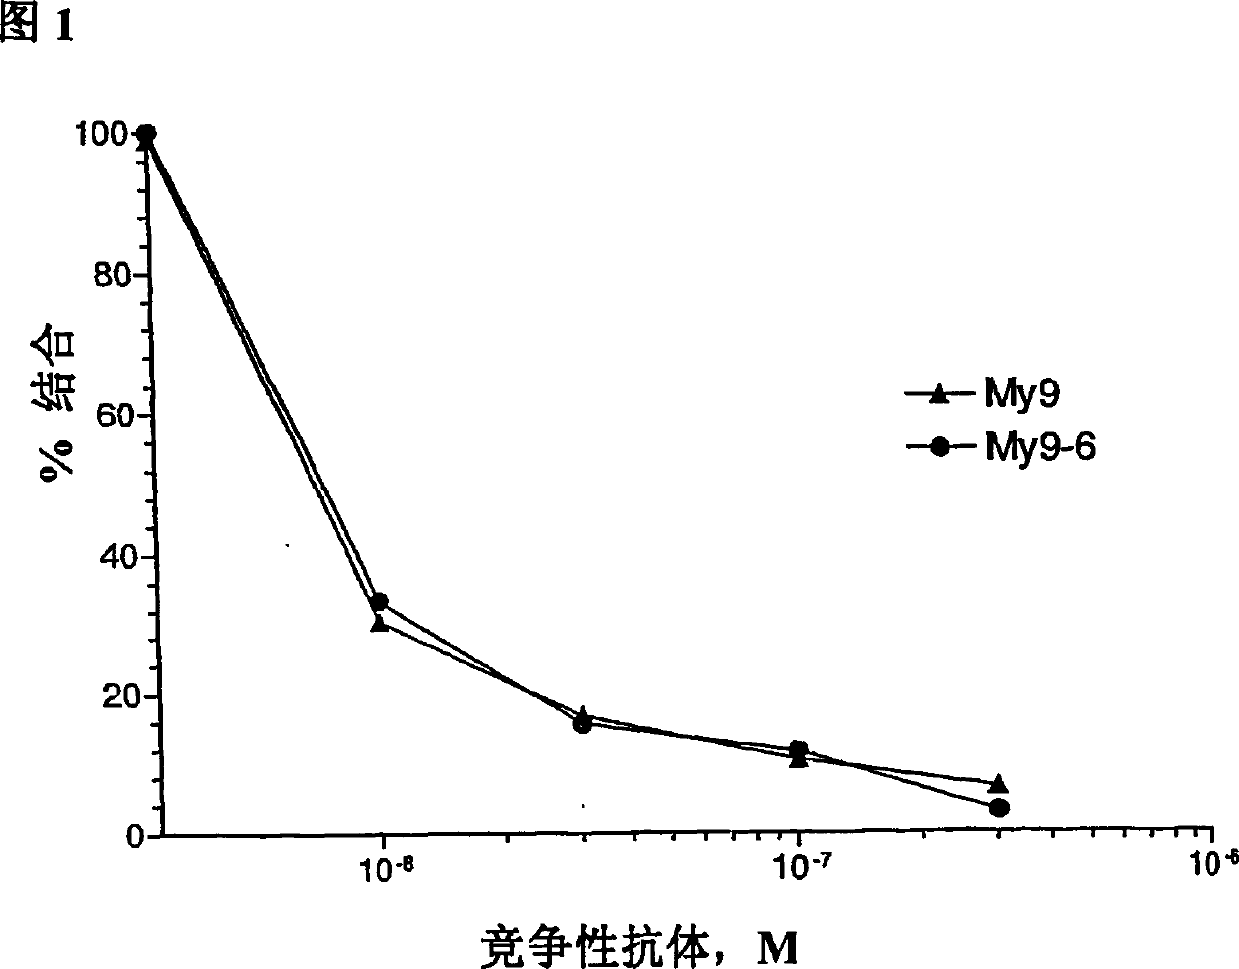 Anti-cd33 antibodies and method for treatment of acute myeloid leukemia using the same